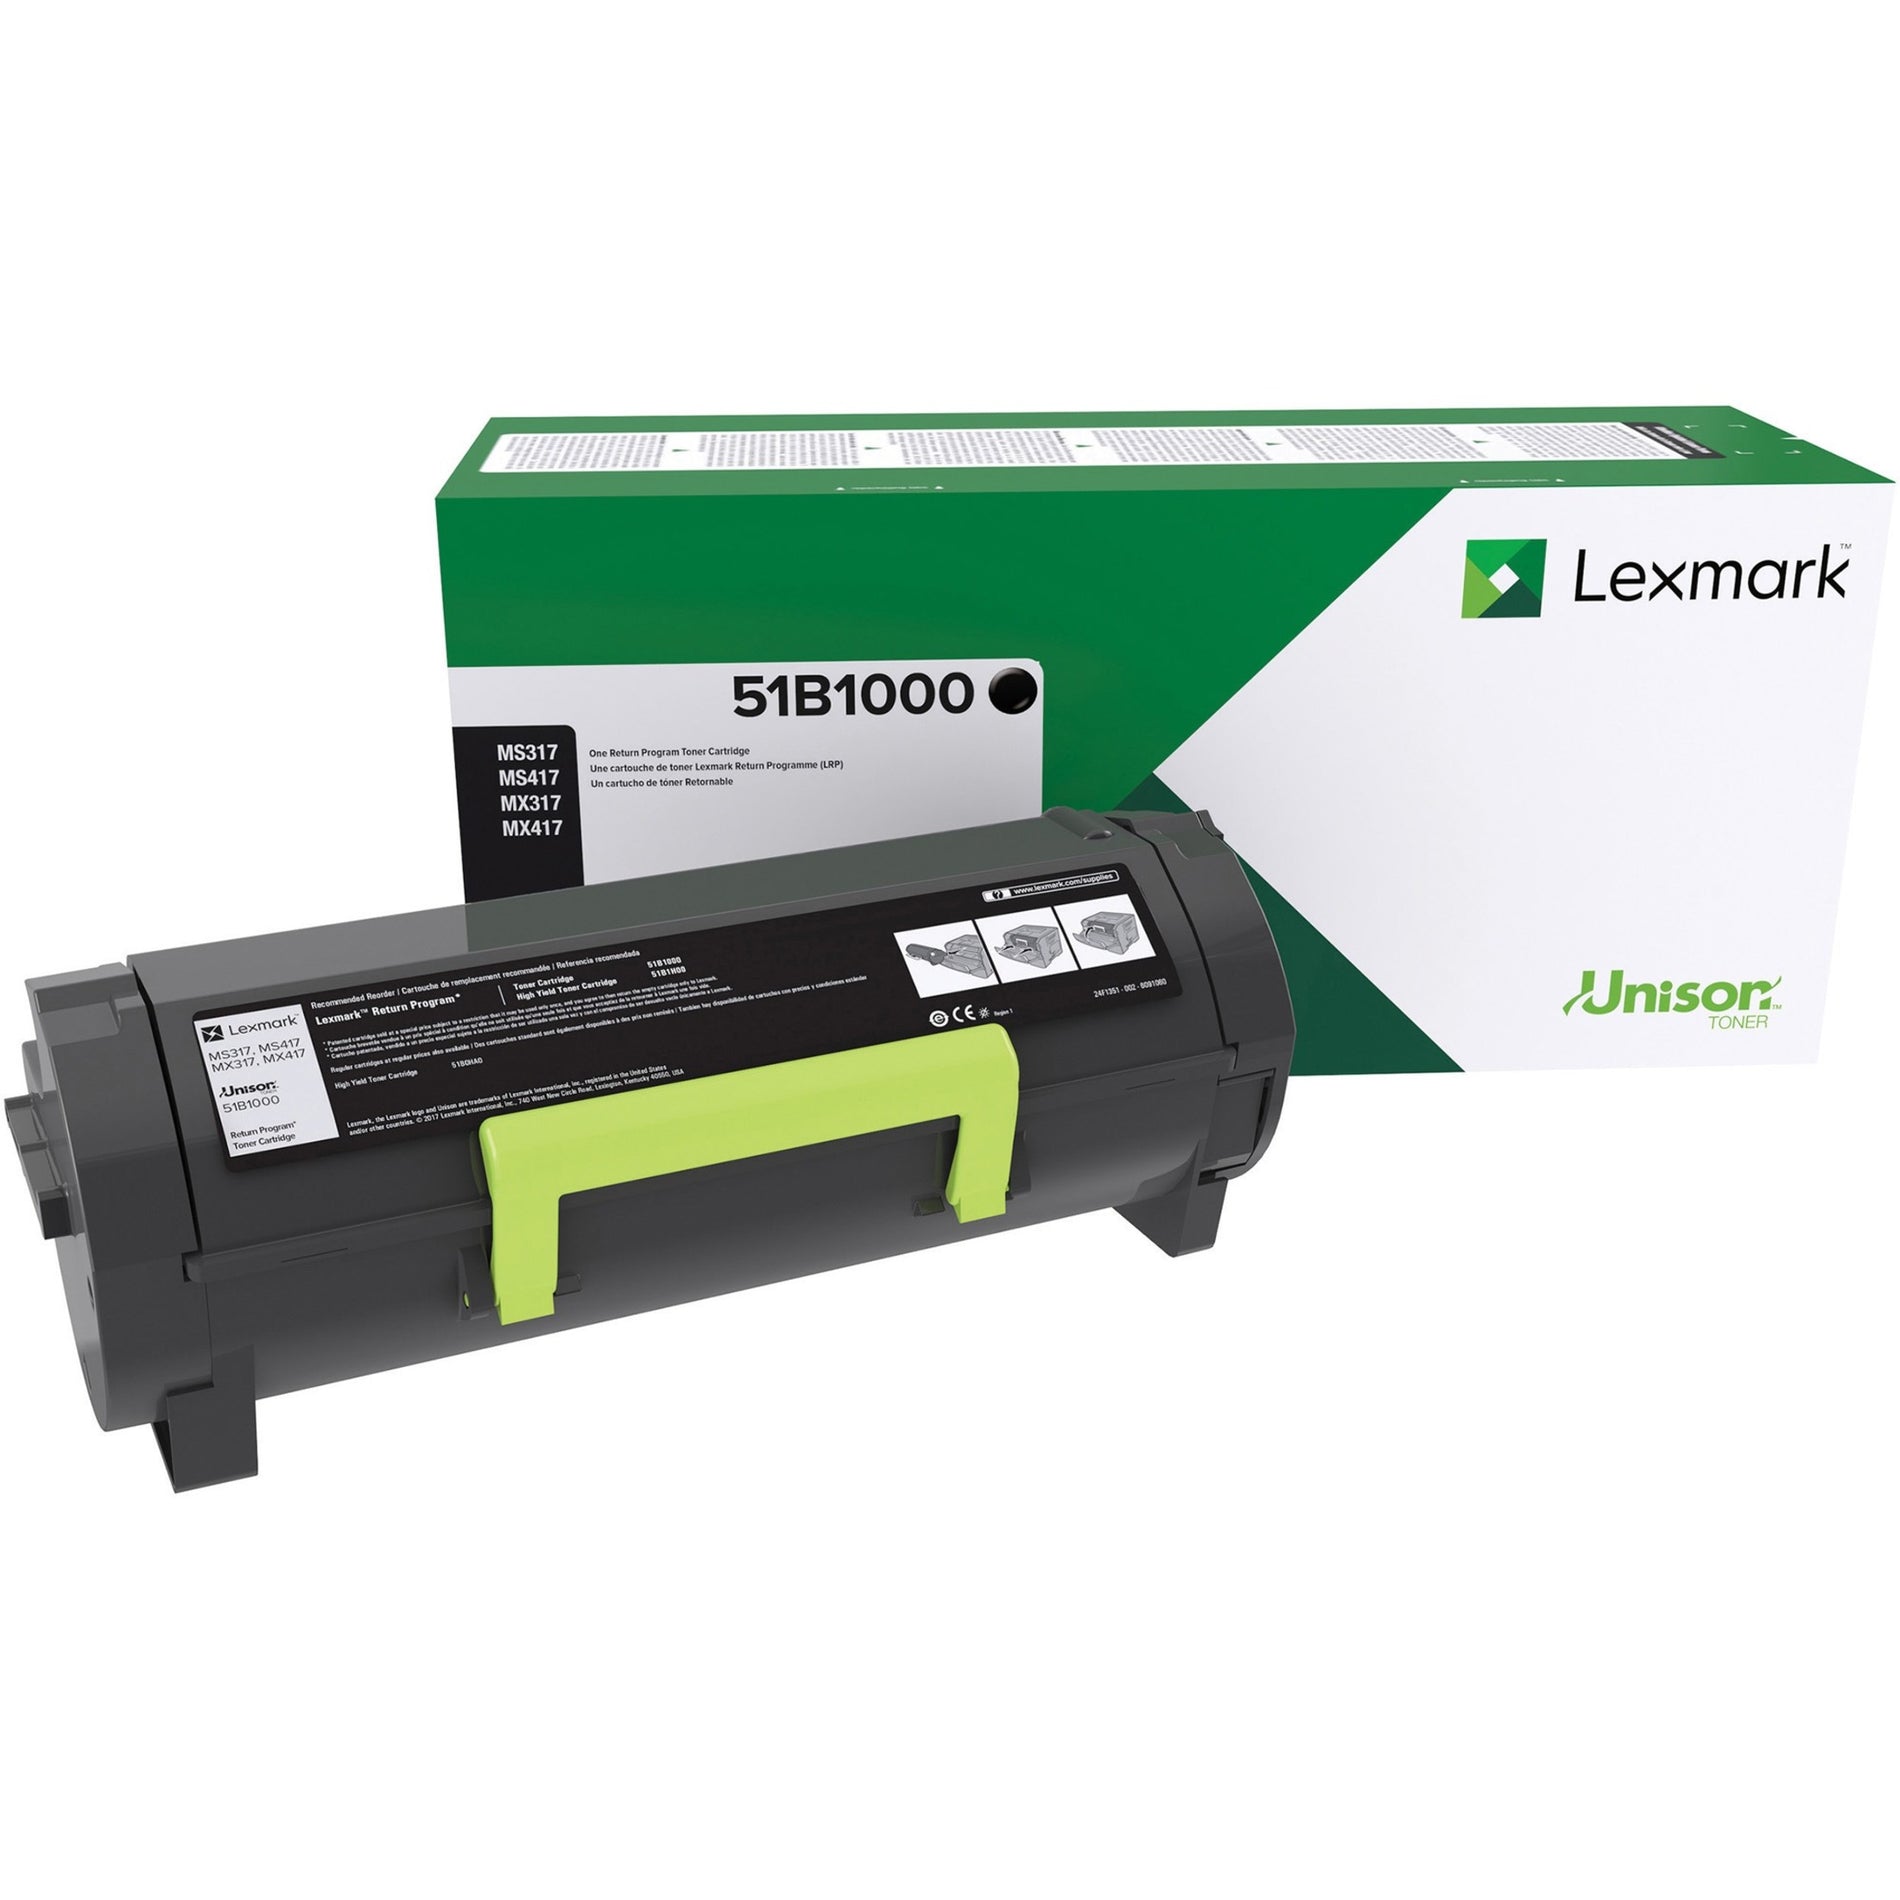 Lexmark 51B1000 Toner Cartridge, Black - Original Laser Toner for Lexmark Printers